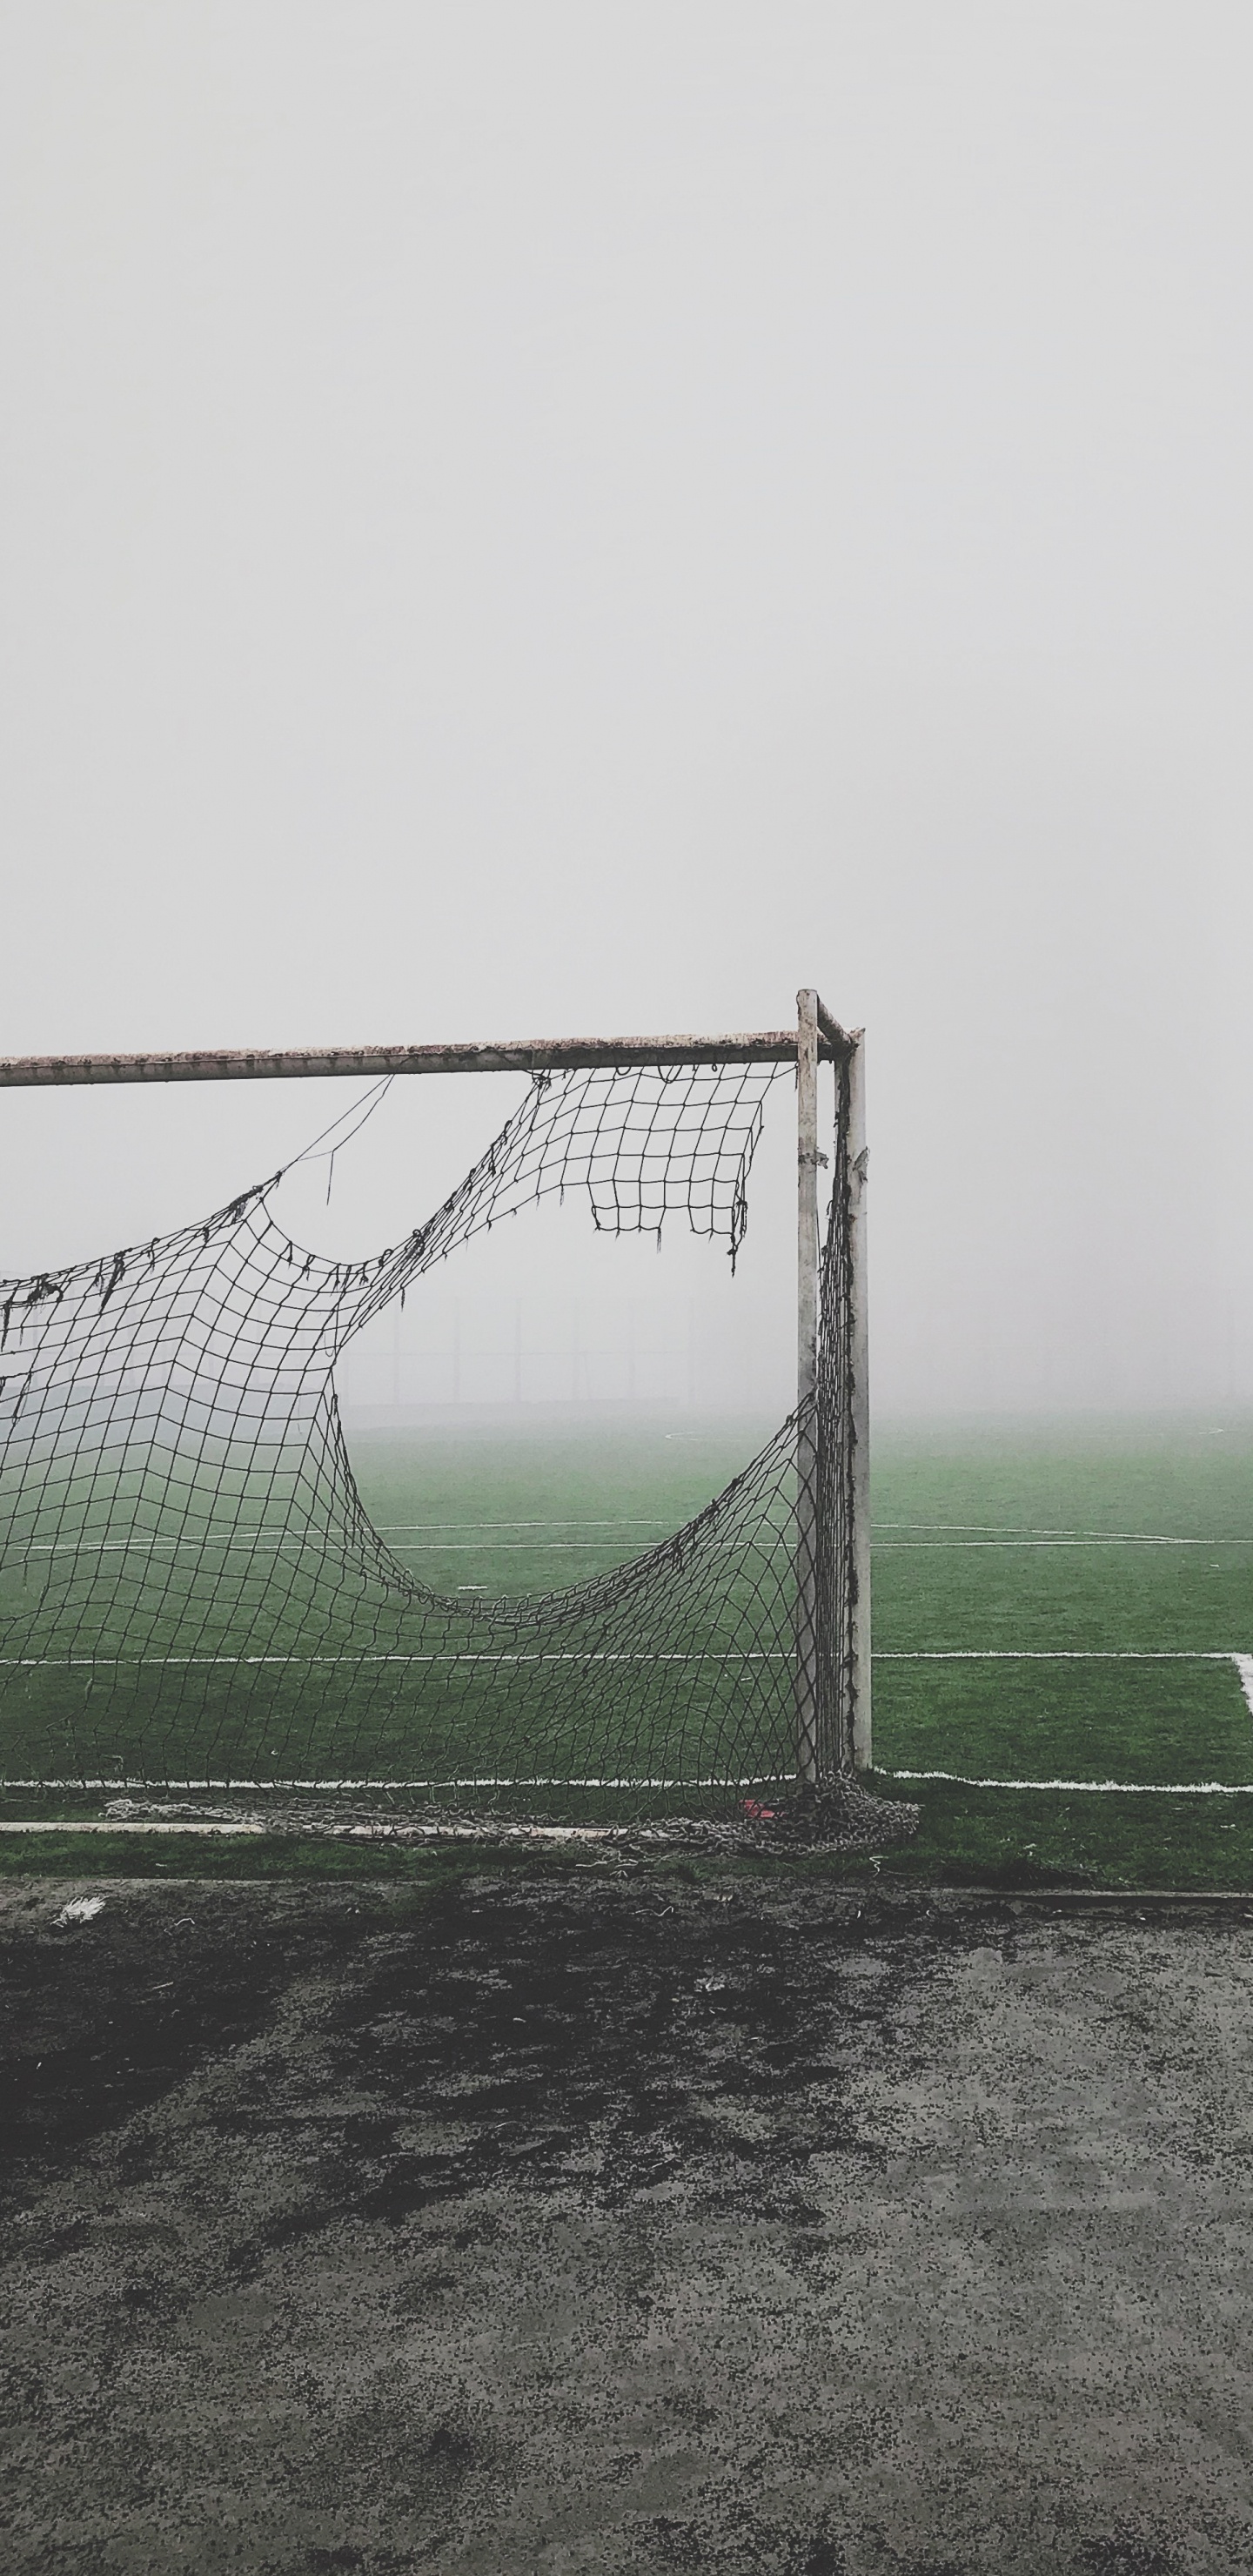 White Soccer Goal Net on Green Grass Field. Wallpaper in 1440x2960 Resolution